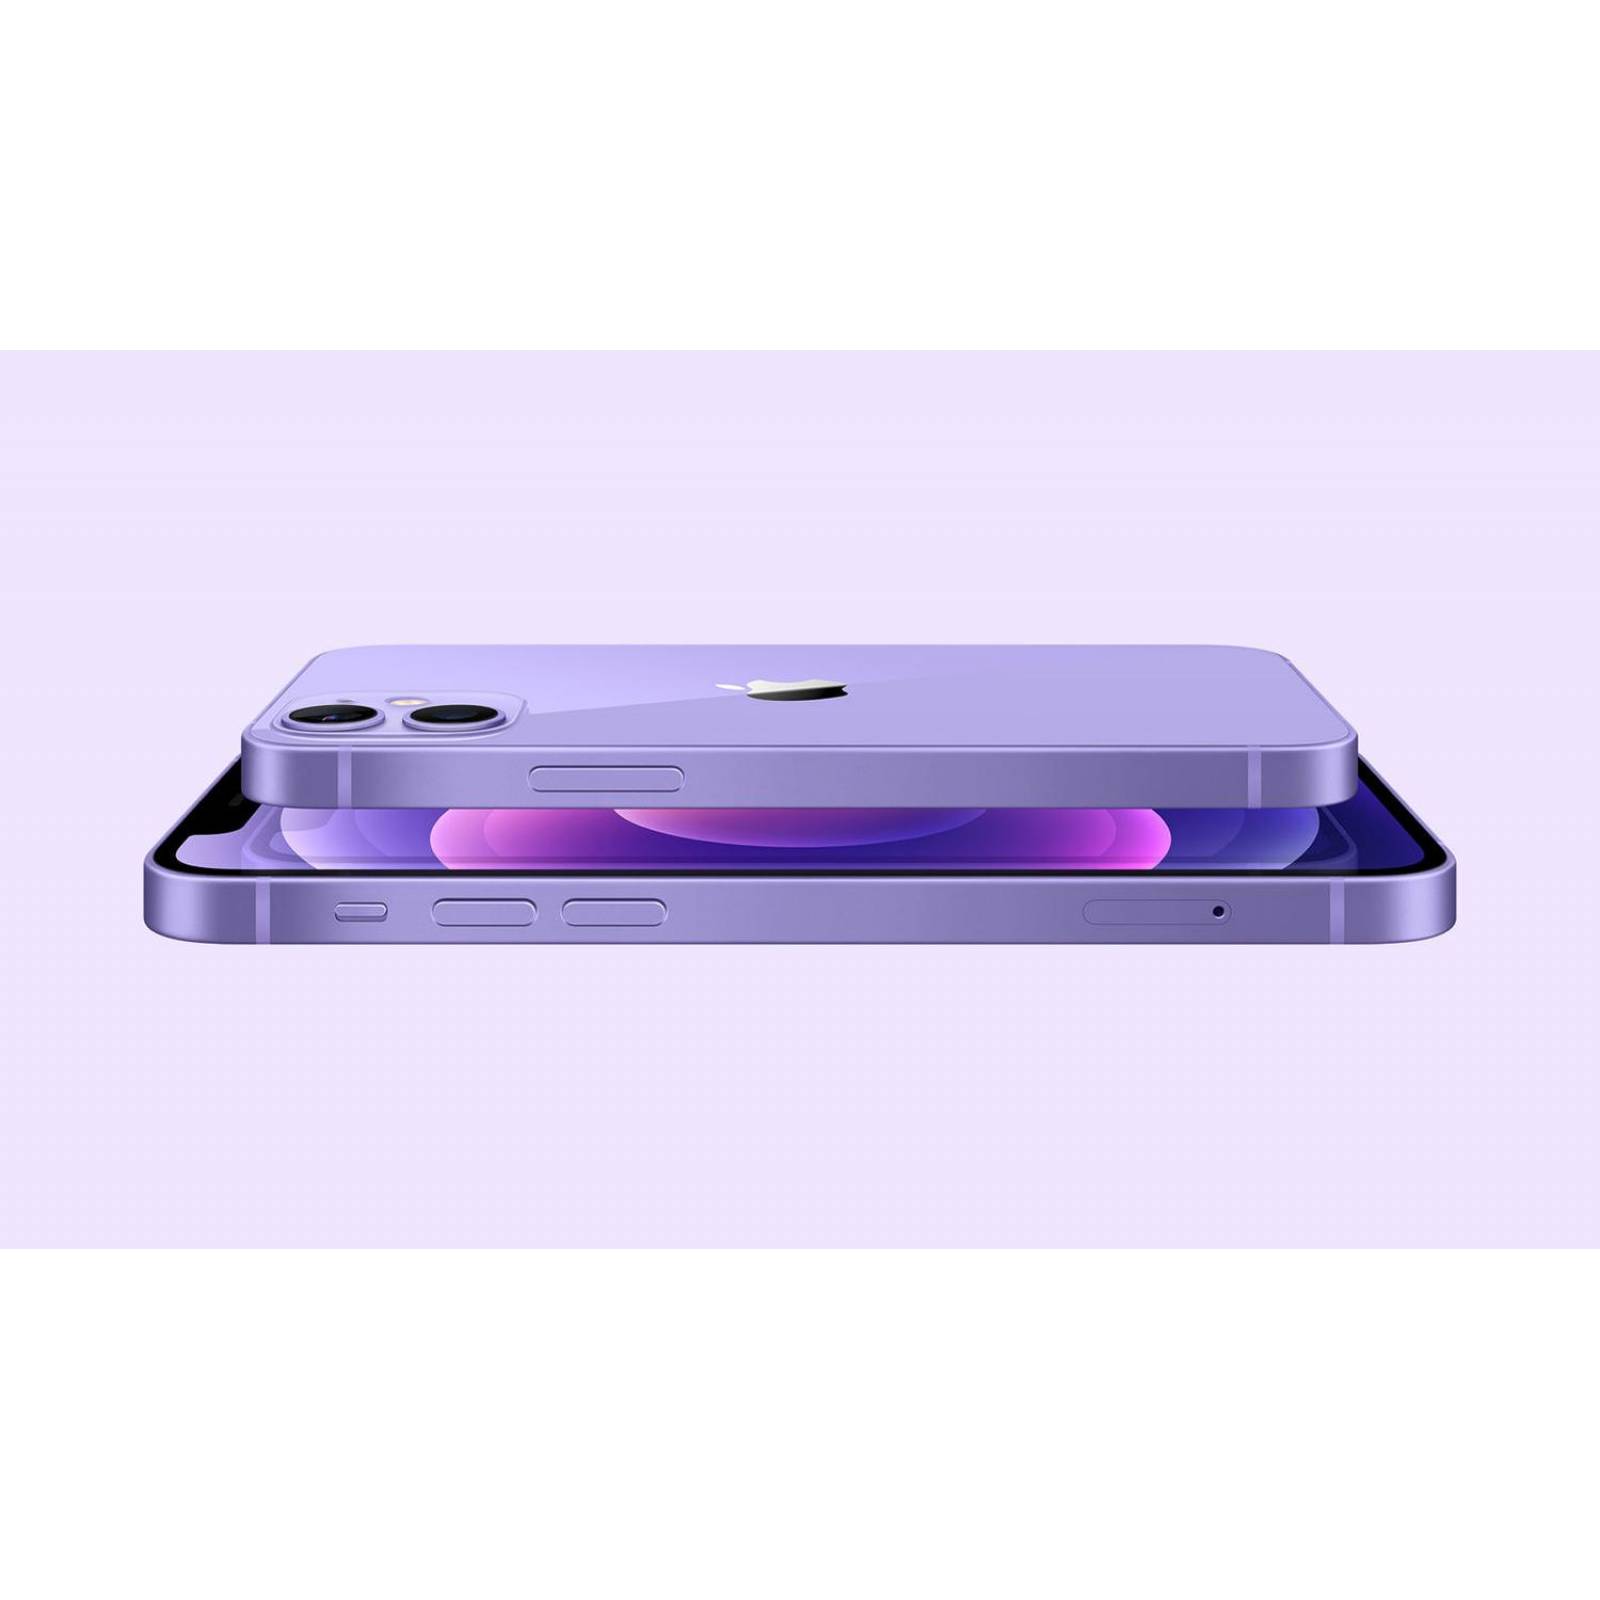 Apple iPhone 12 mini 128 Gb Morado Reacondicionado Tipo A